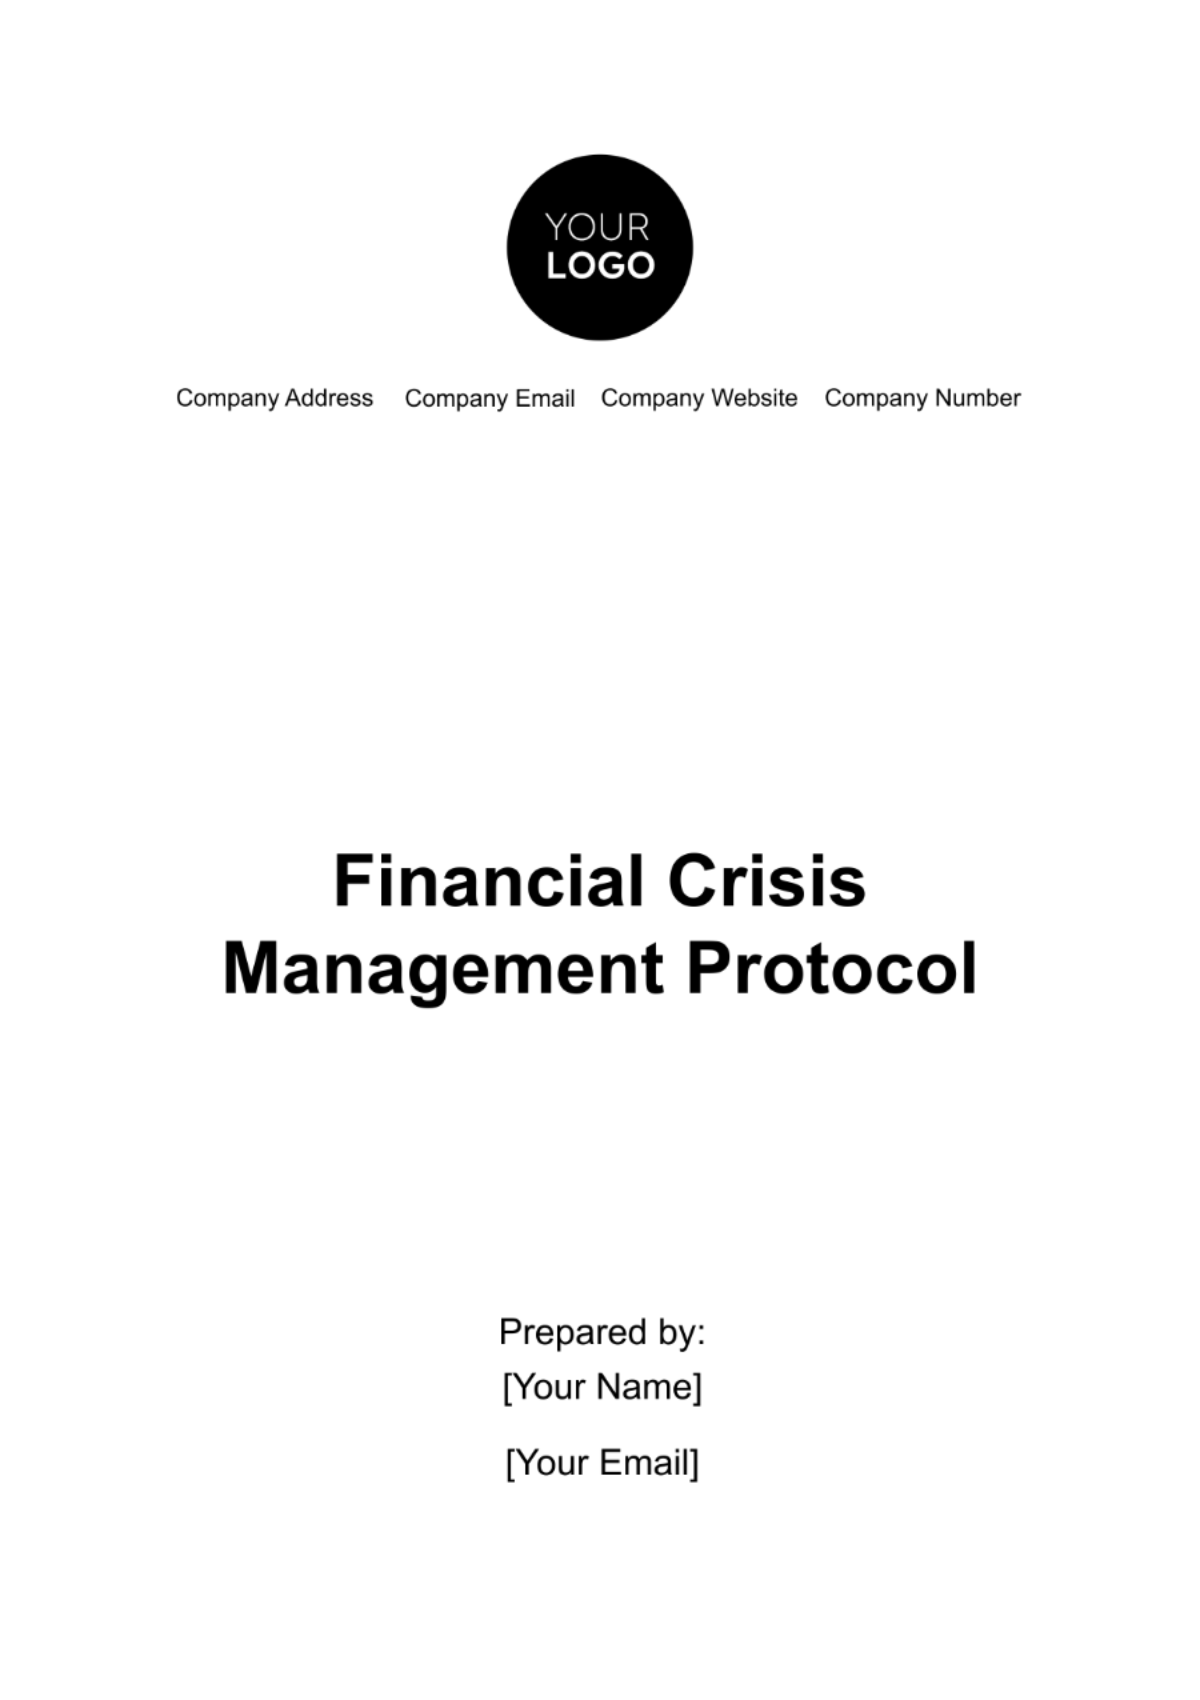 Financial Crisis Management Protocol Template